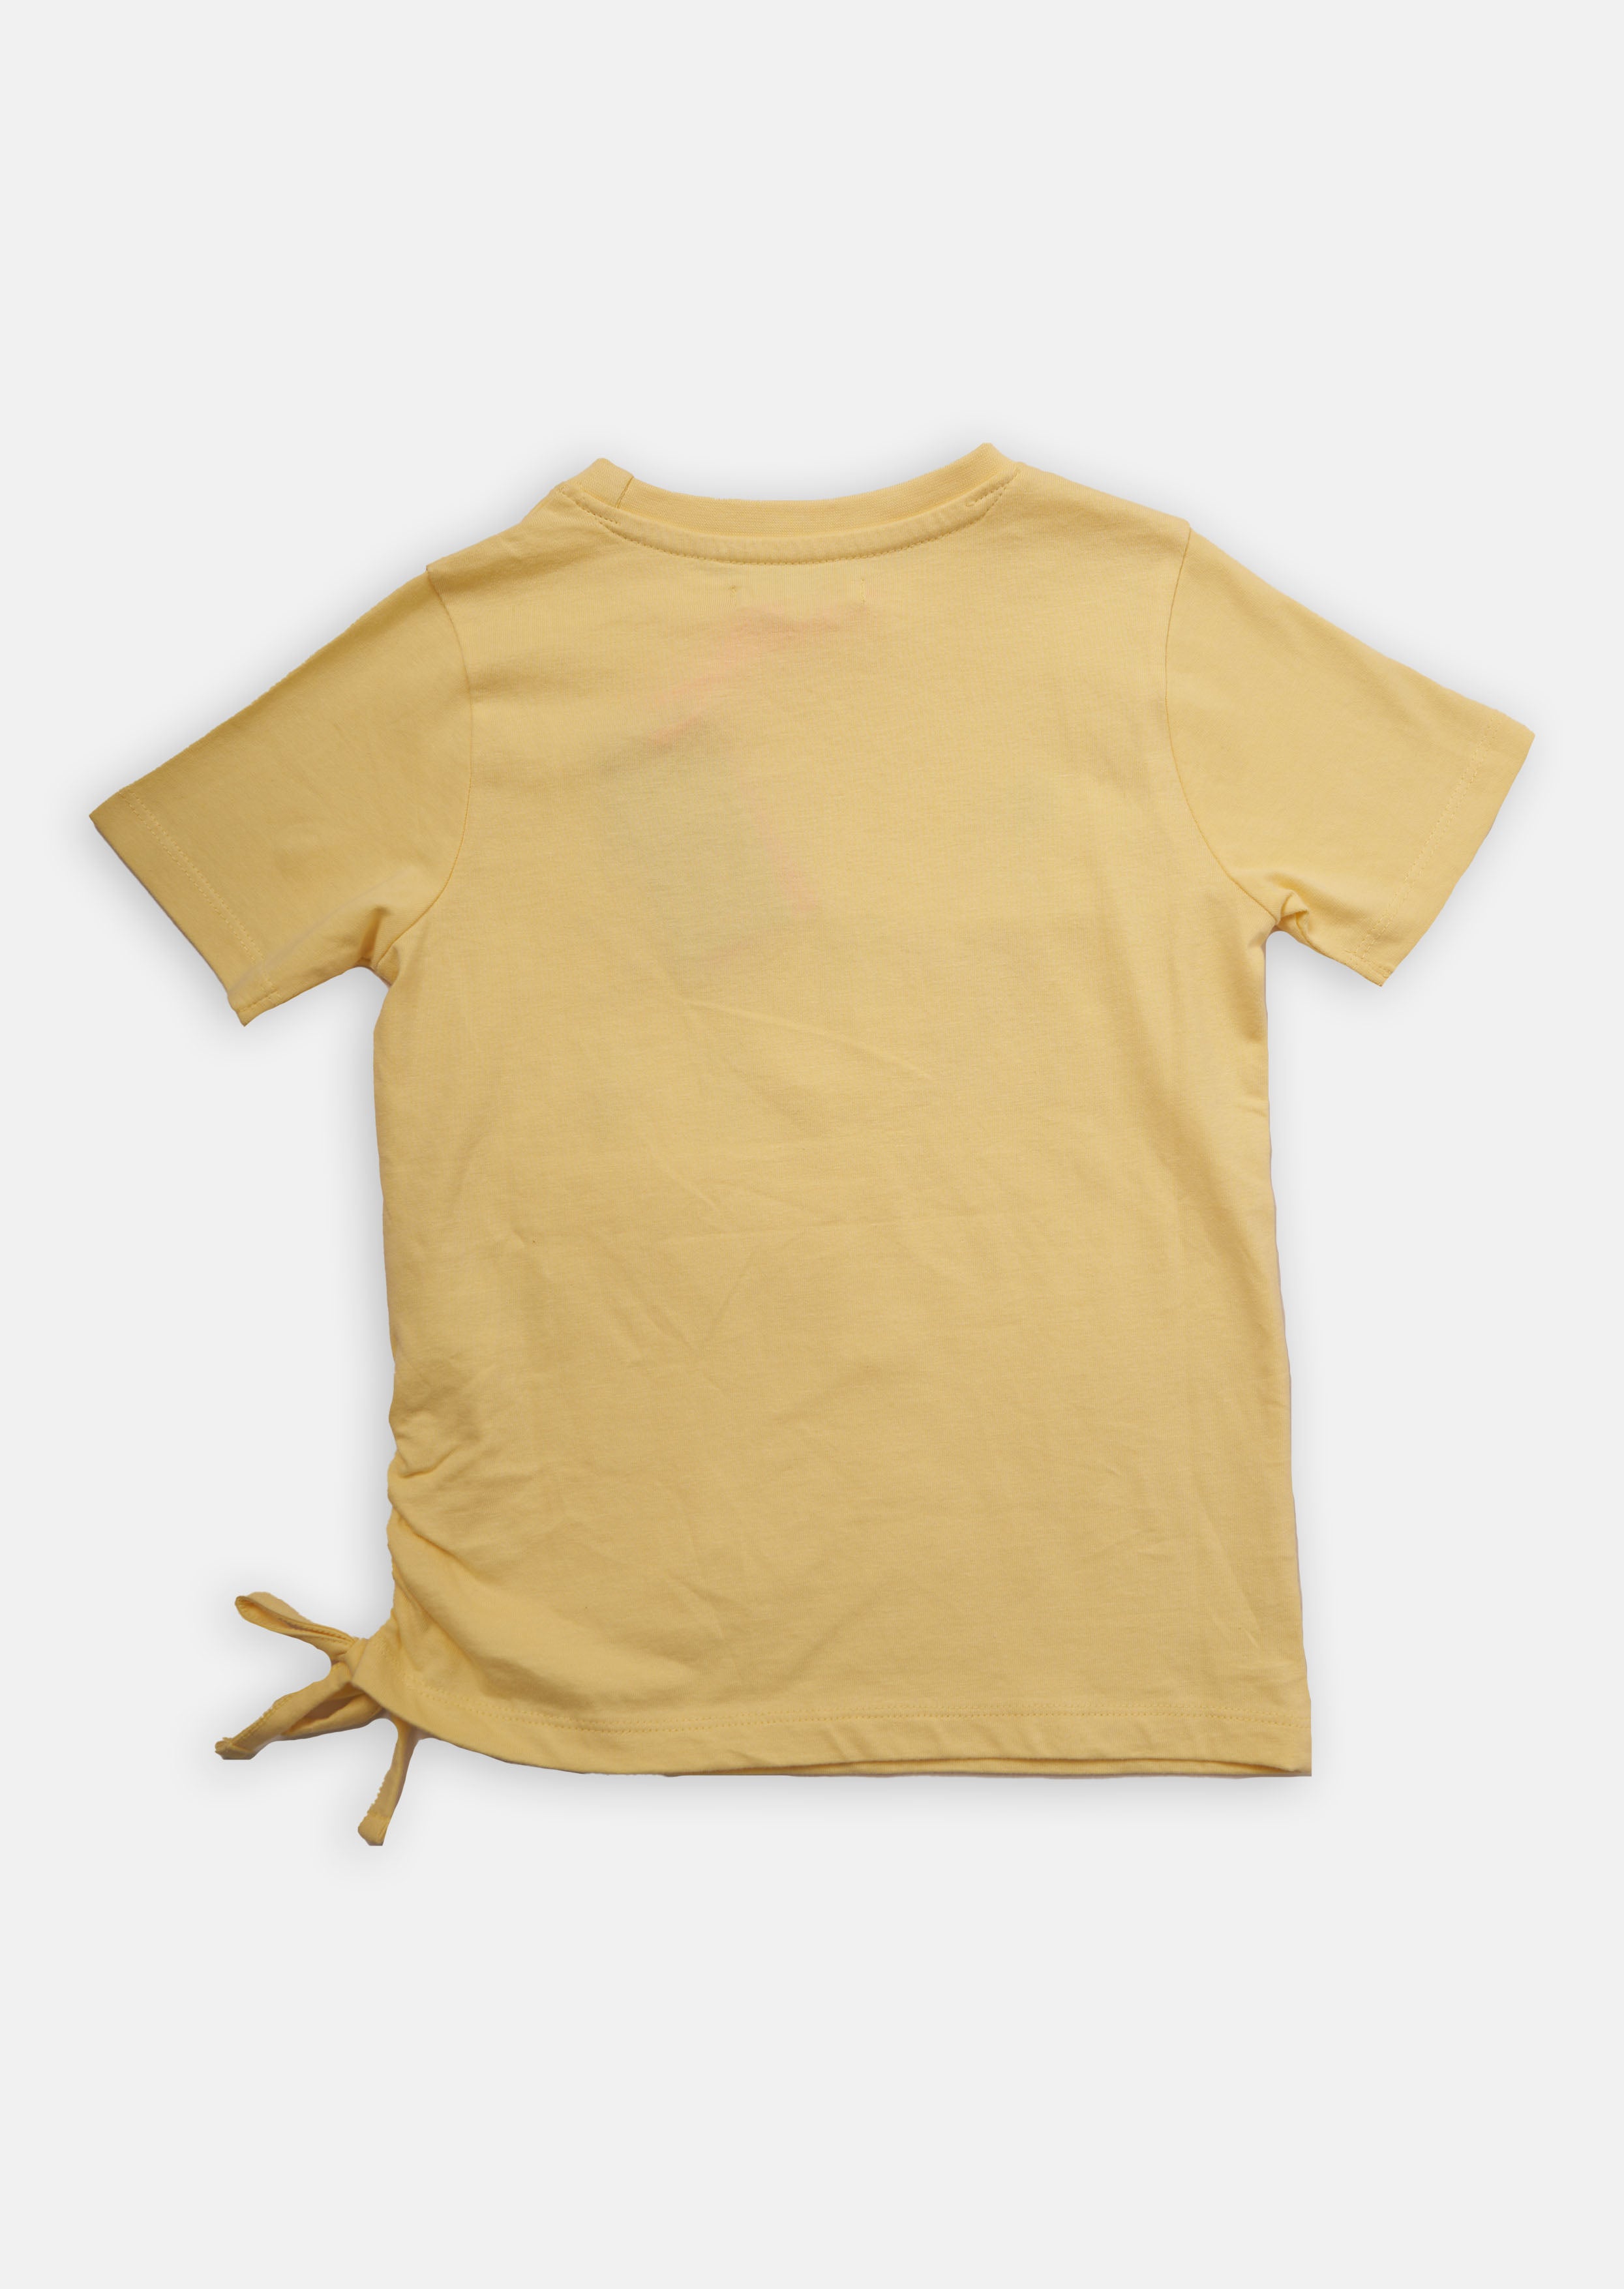 Girls Pretty Printed Cotton Yellow T-Shirt